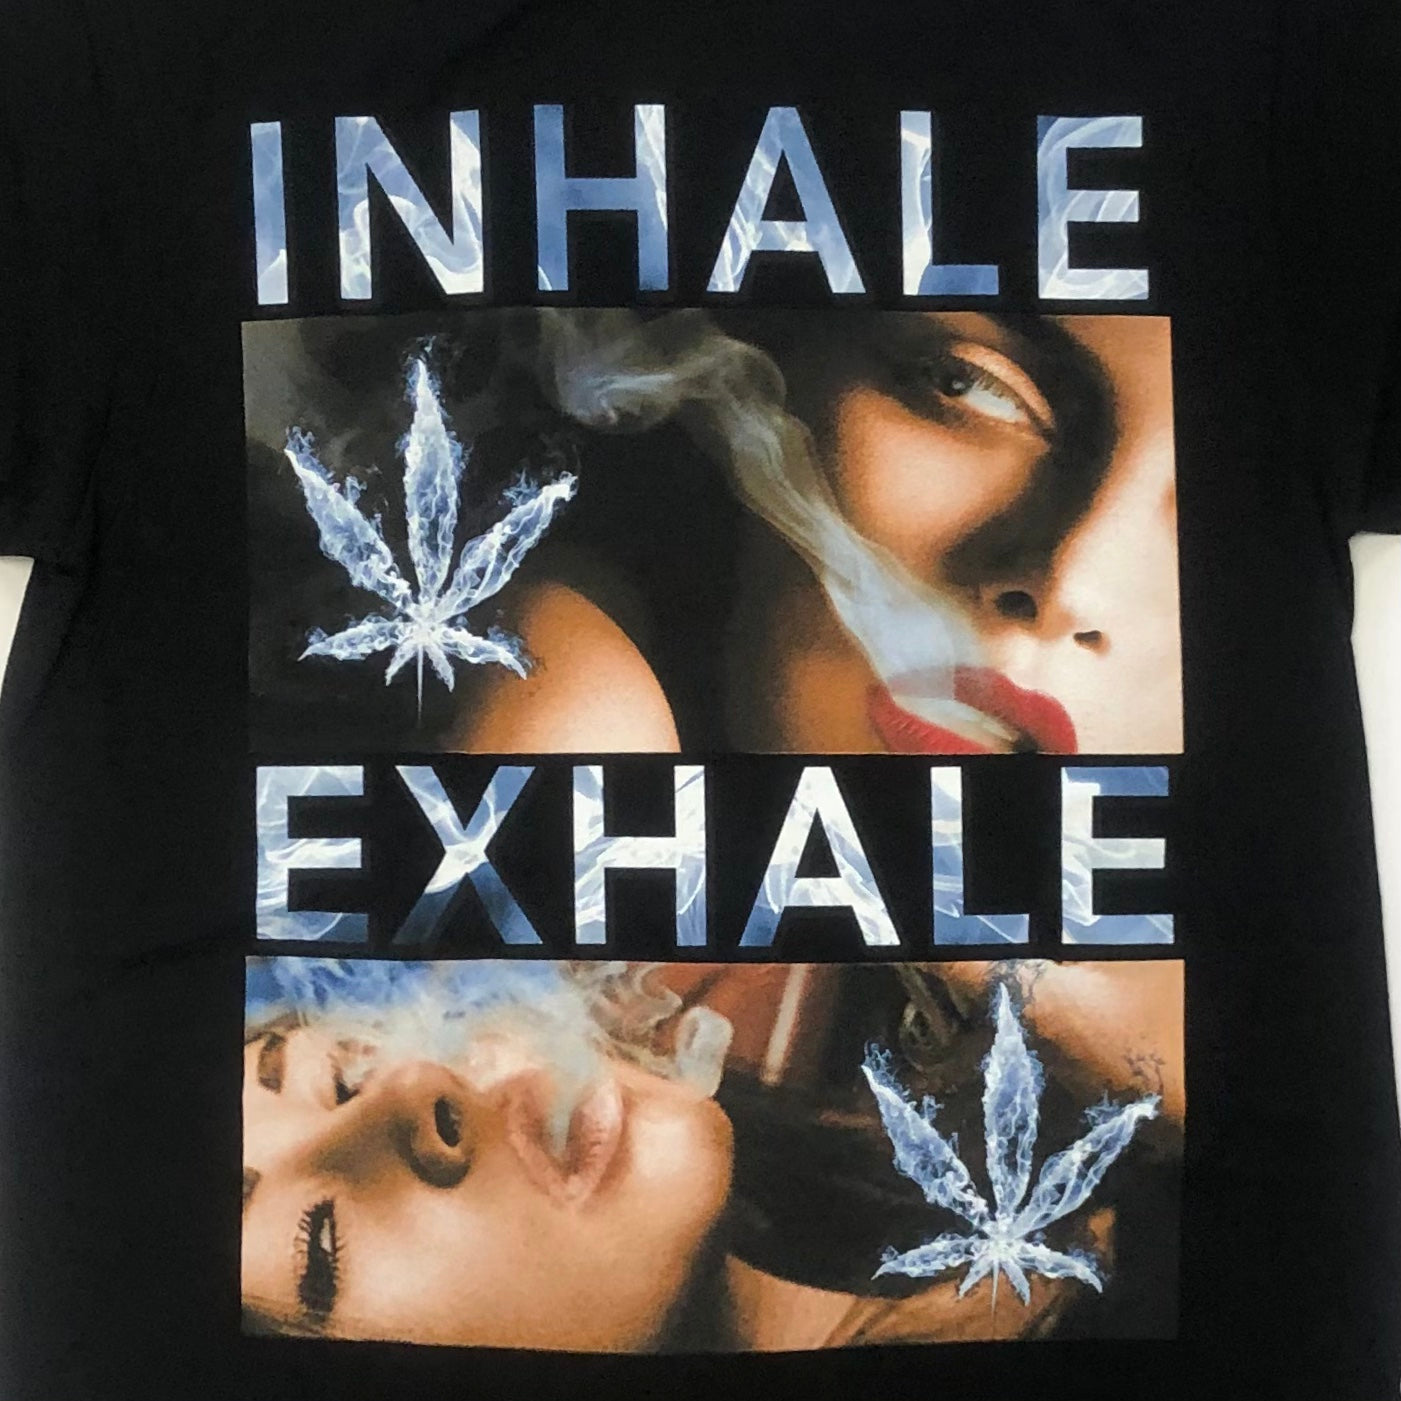 BILLIONAIRE Inhale Exhale Graphic T-Shirt